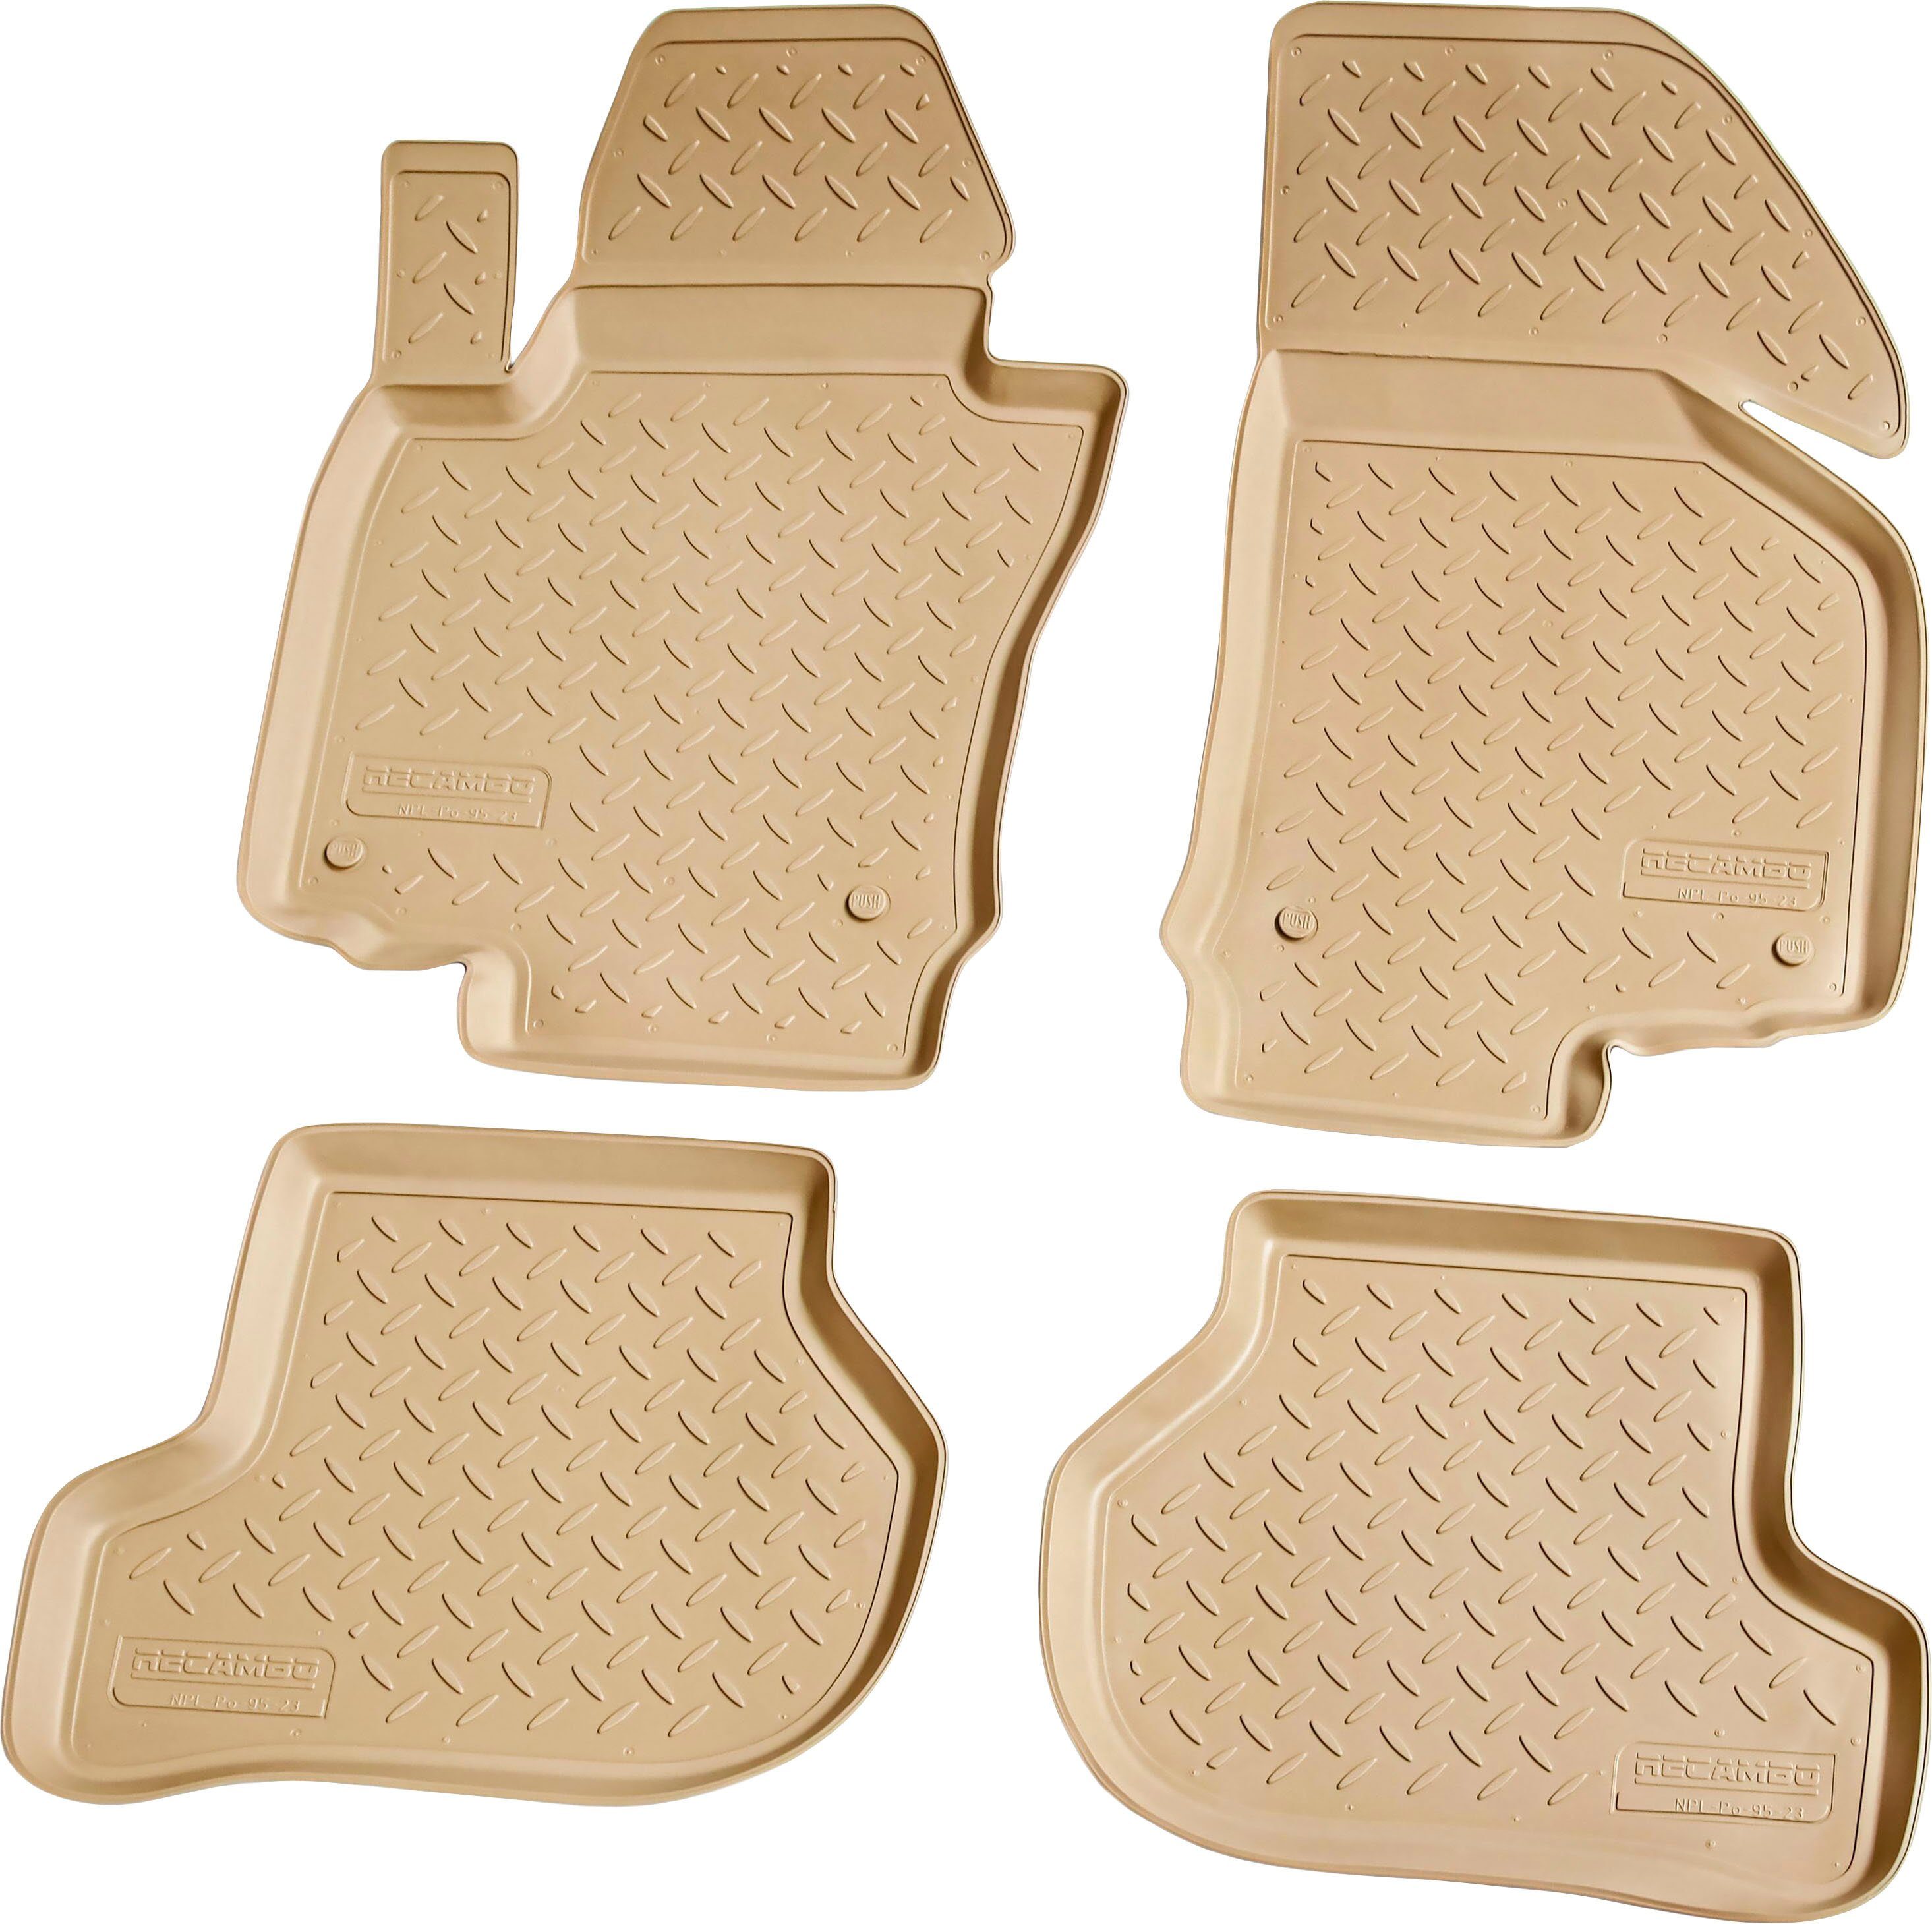 RECAMBO Passform-Fußmatten CustomComforts (4 St), für SEAT Altea, Altea XL 2004 - 2015, perfekte Passform